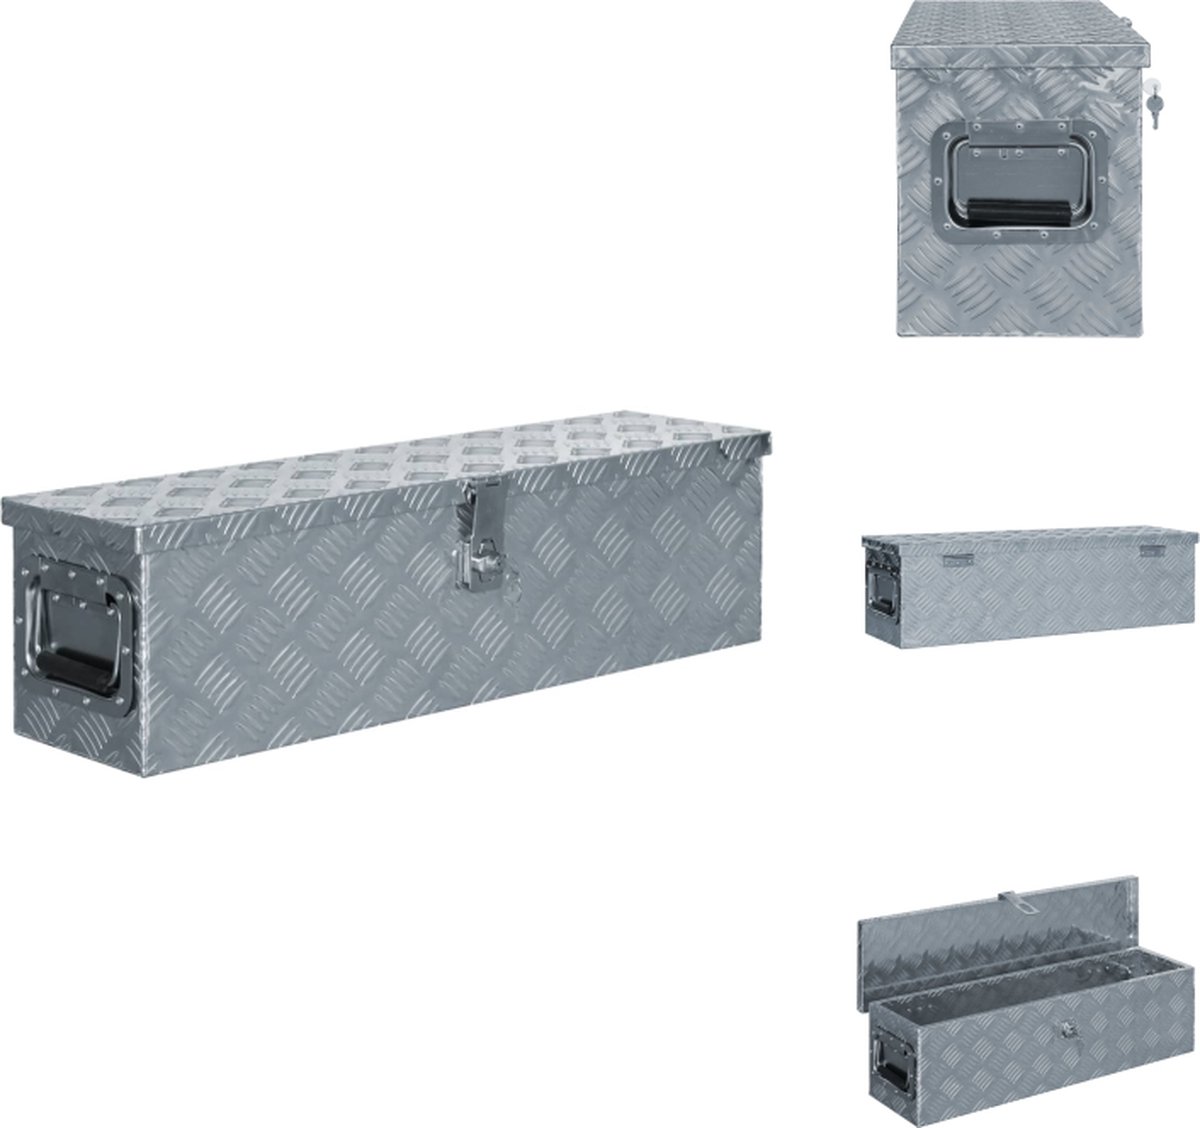 VidaXL Aluminium Trailerbox 80.5 x 22 cm Roestbestendig Duurzaam Gereedschapskoffer